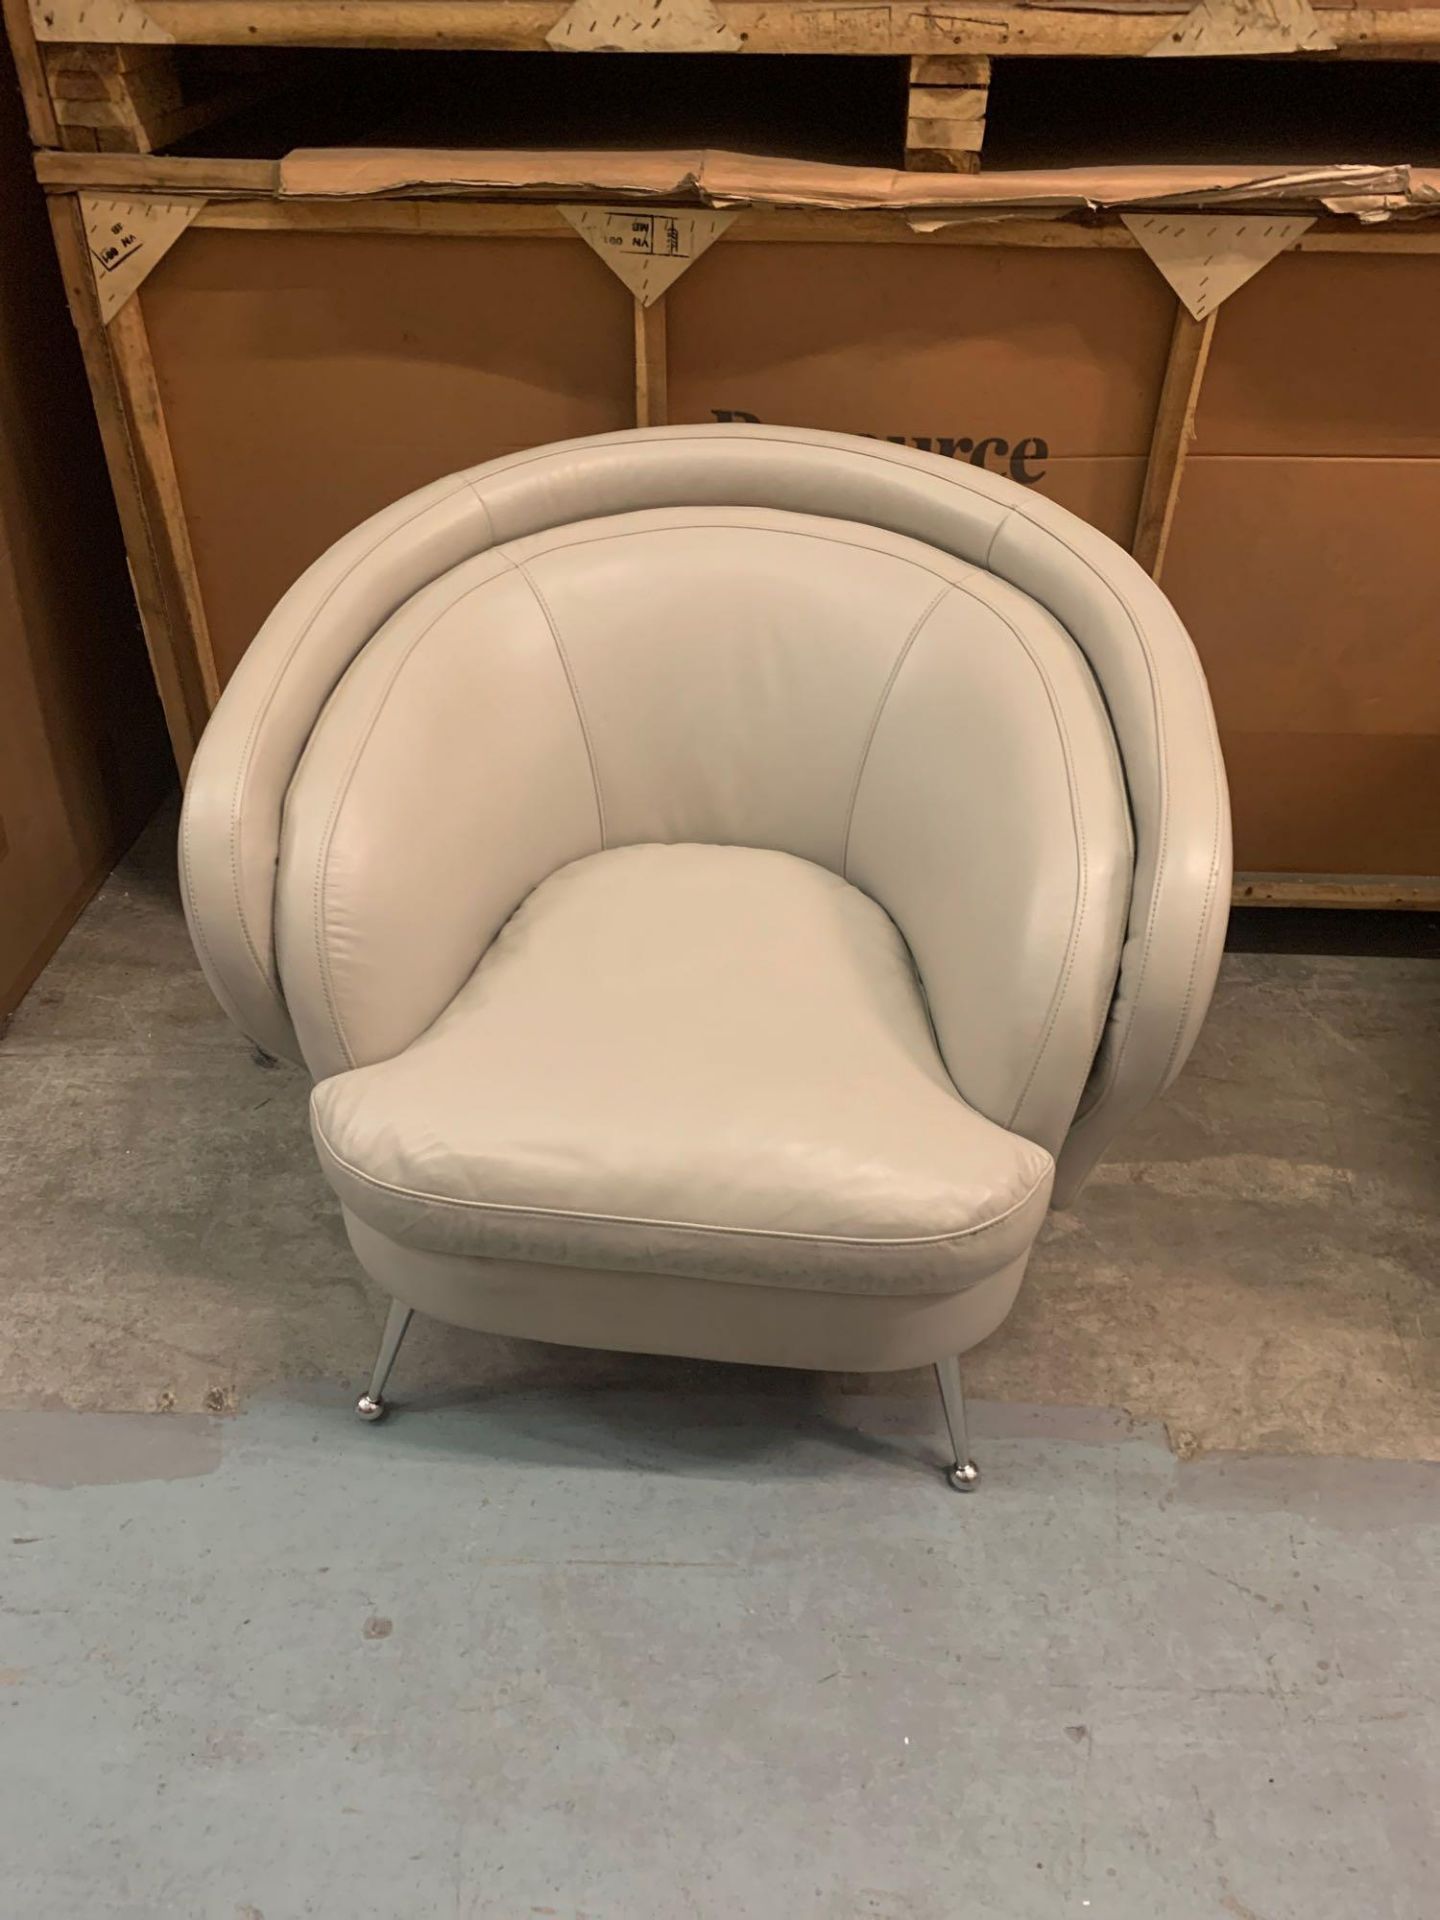 Tesoro Tub Chair Cream Leather W930 x D860 x H790mm - Image 6 of 7